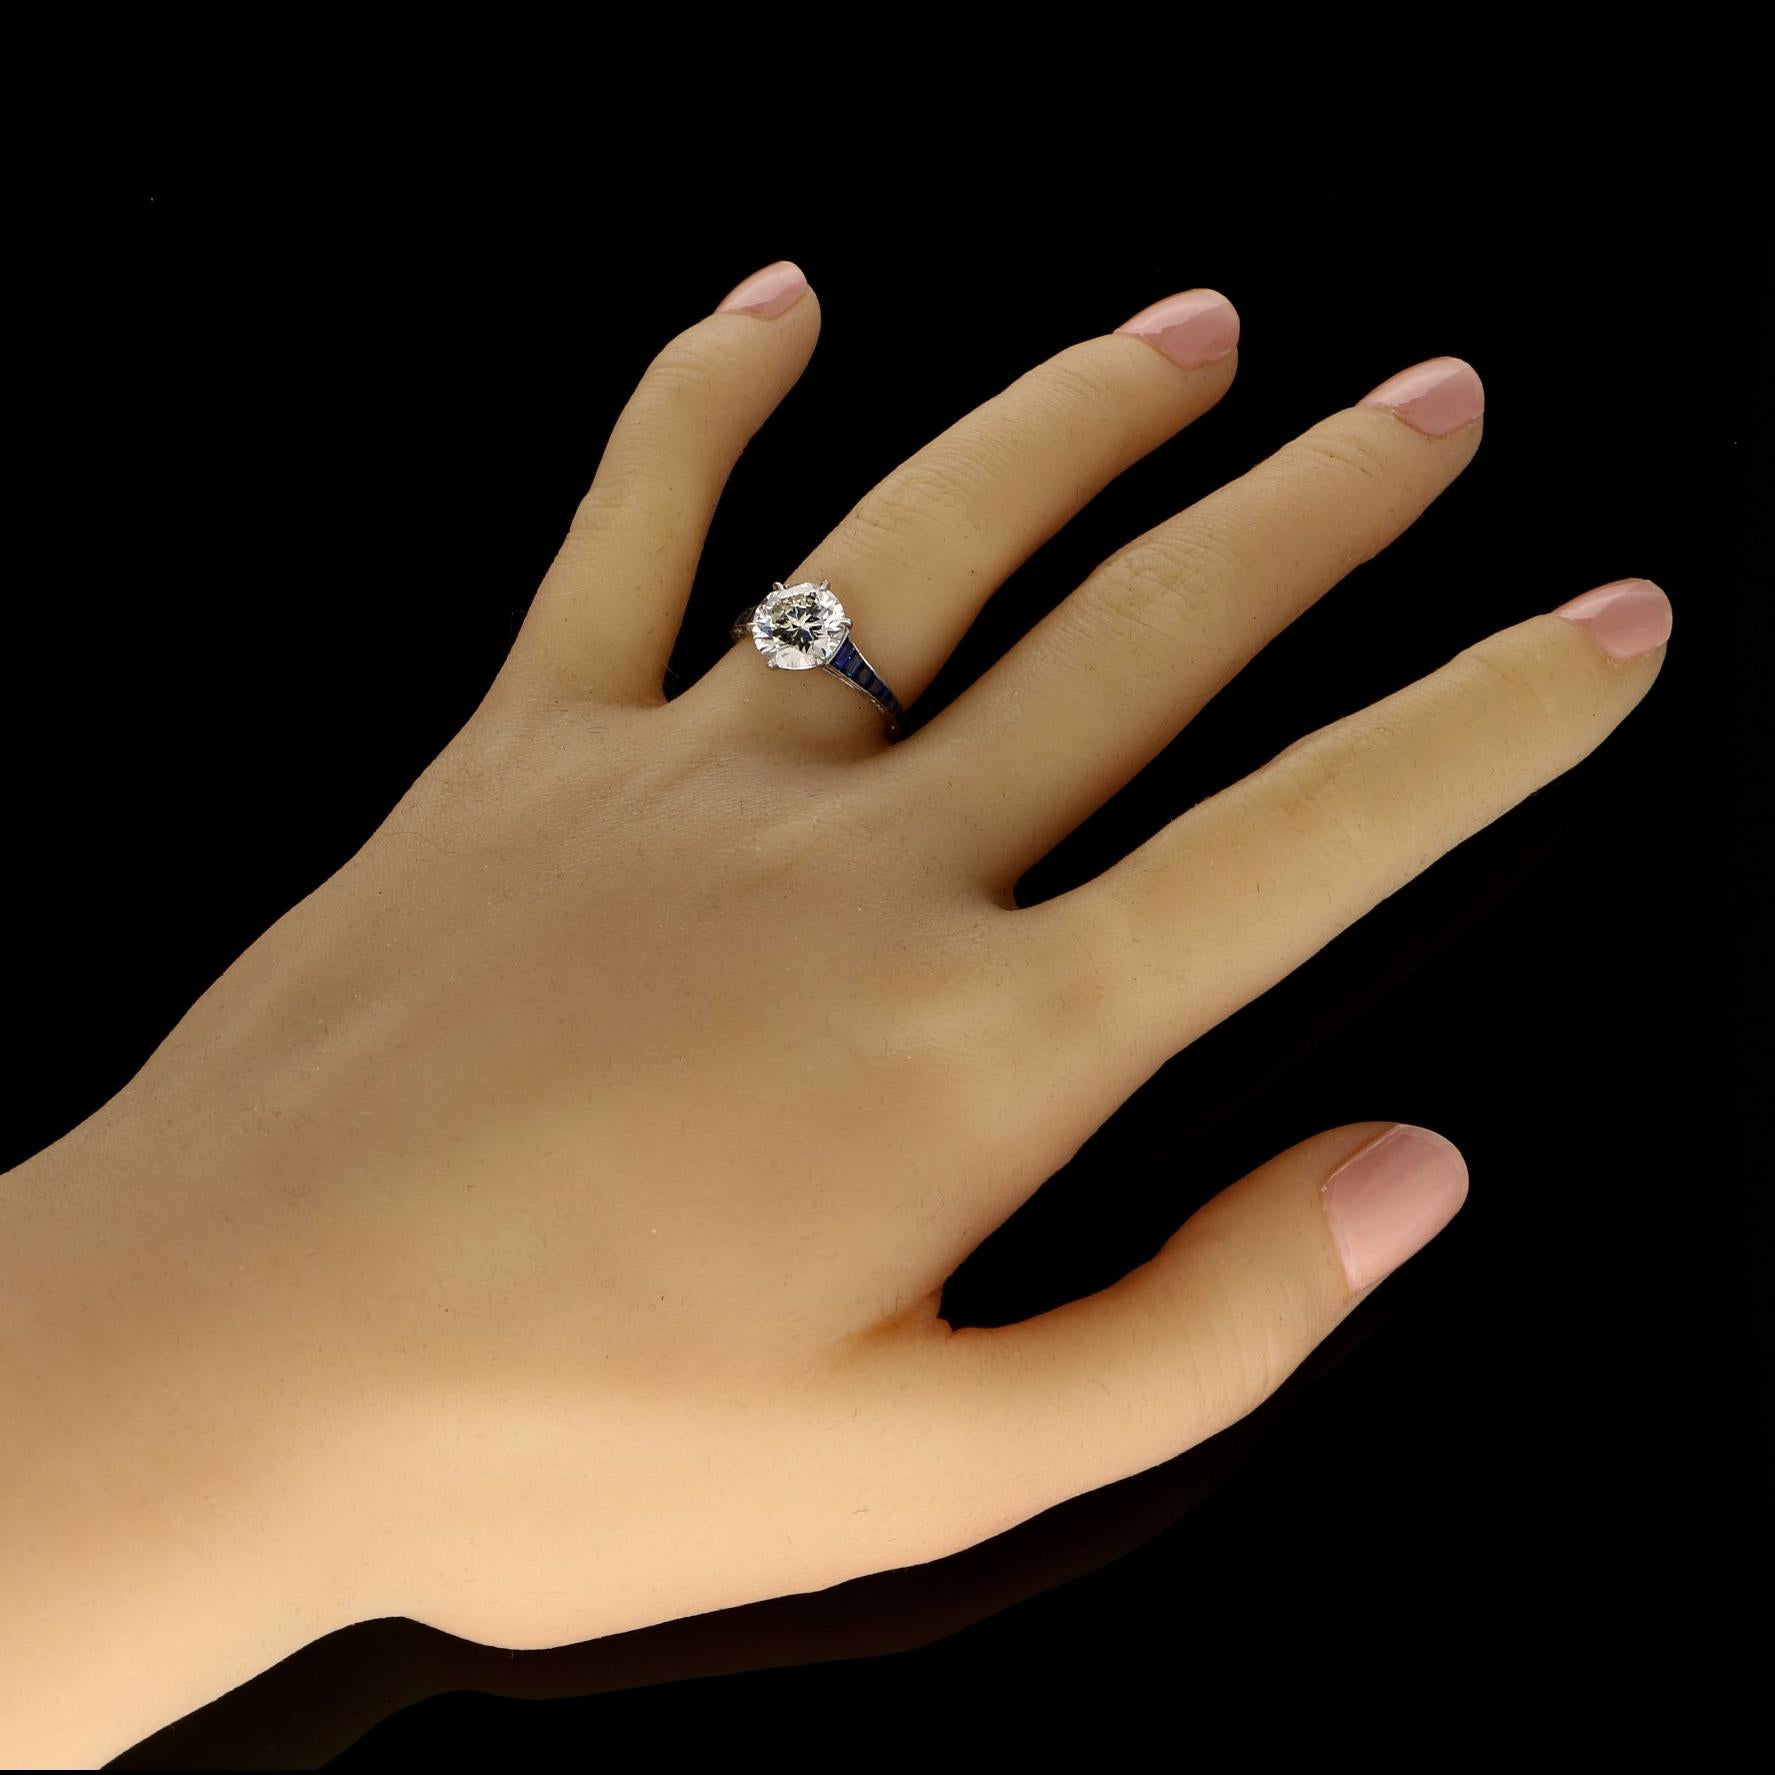 Women's or Men's Hancocks 2.50 Carat Old-Cut Diamond Ring with Calibre-Cut Sapphire Shoulders